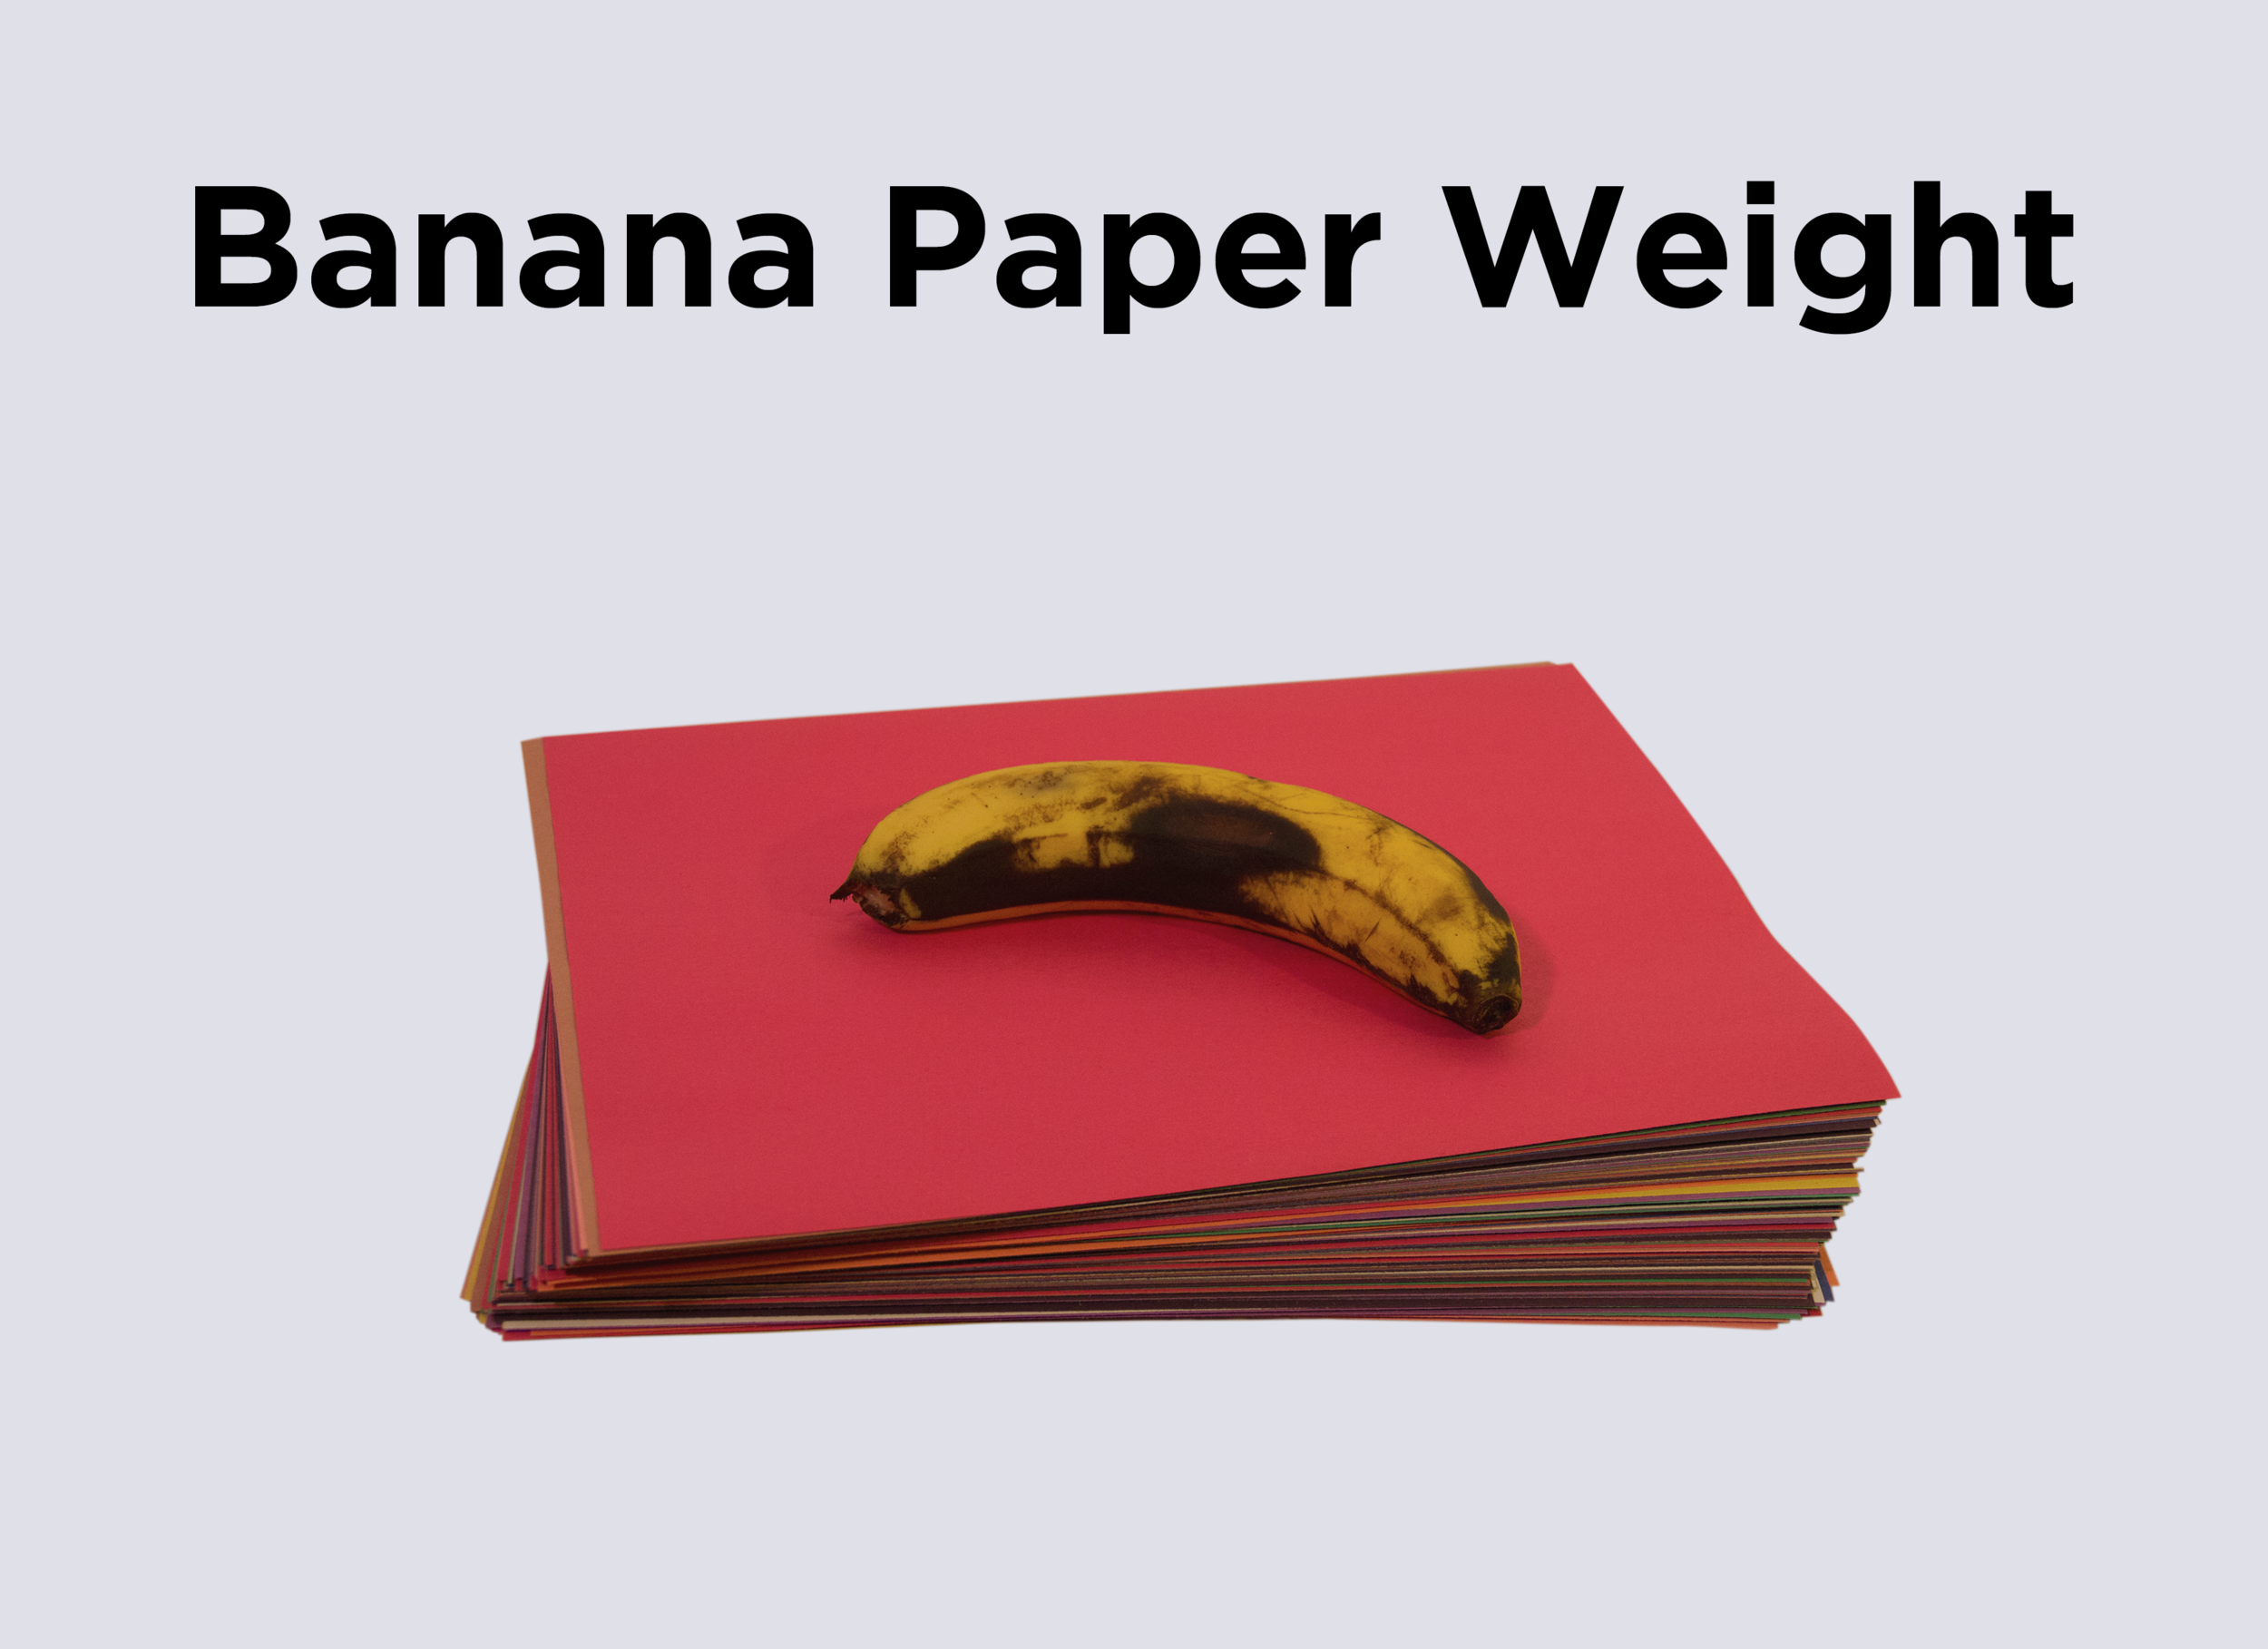 1. Banana Paper Weight.png